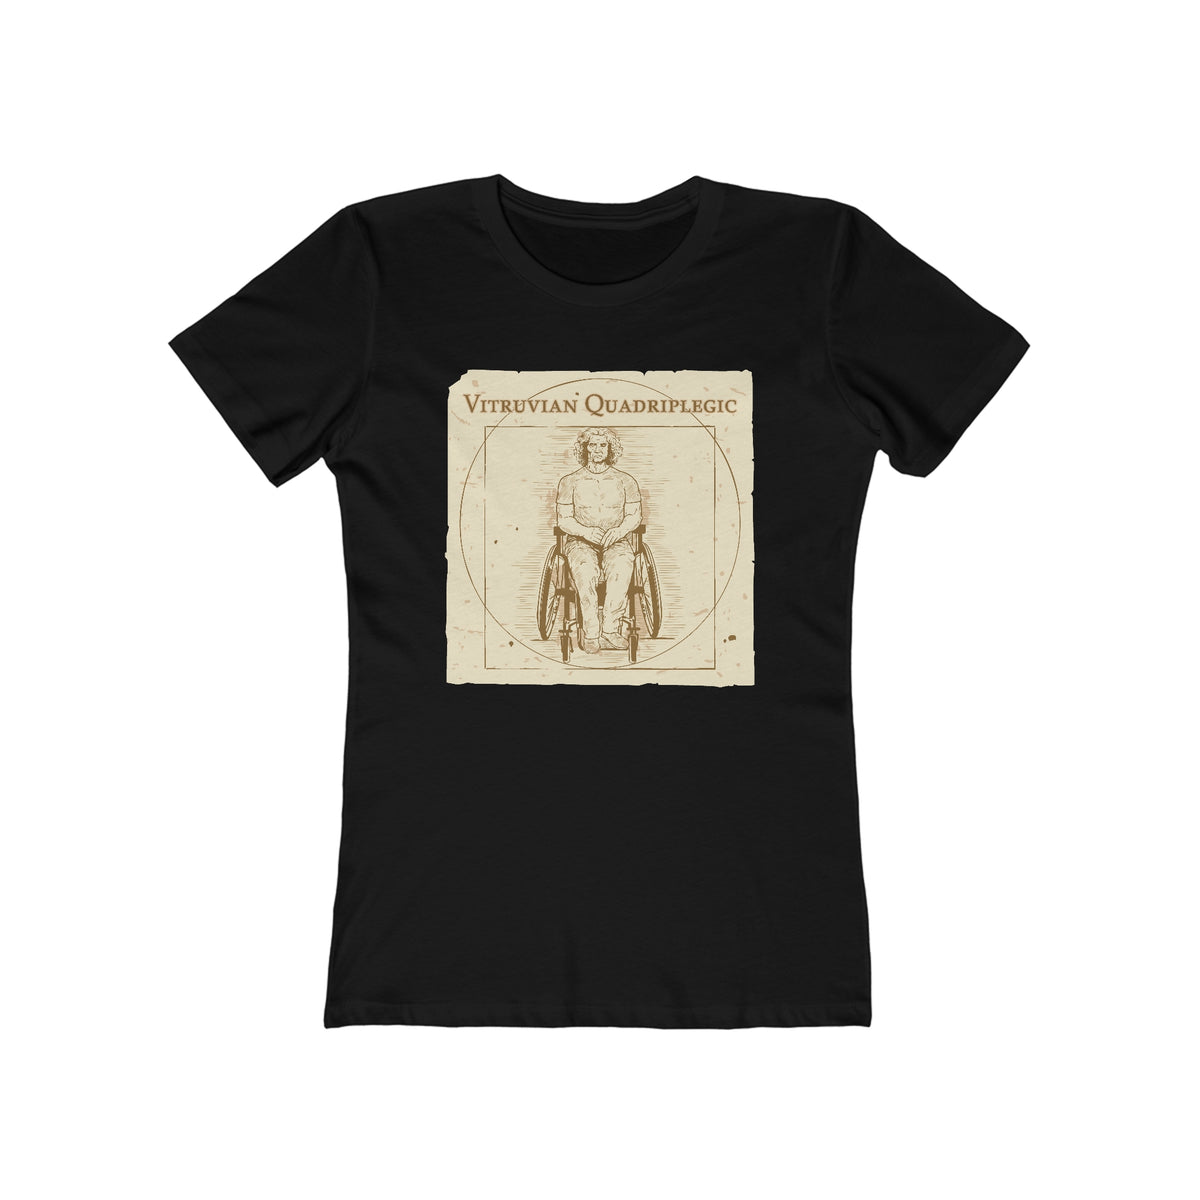 Vitruvian Quadriplegic - Women’s T-Shirt